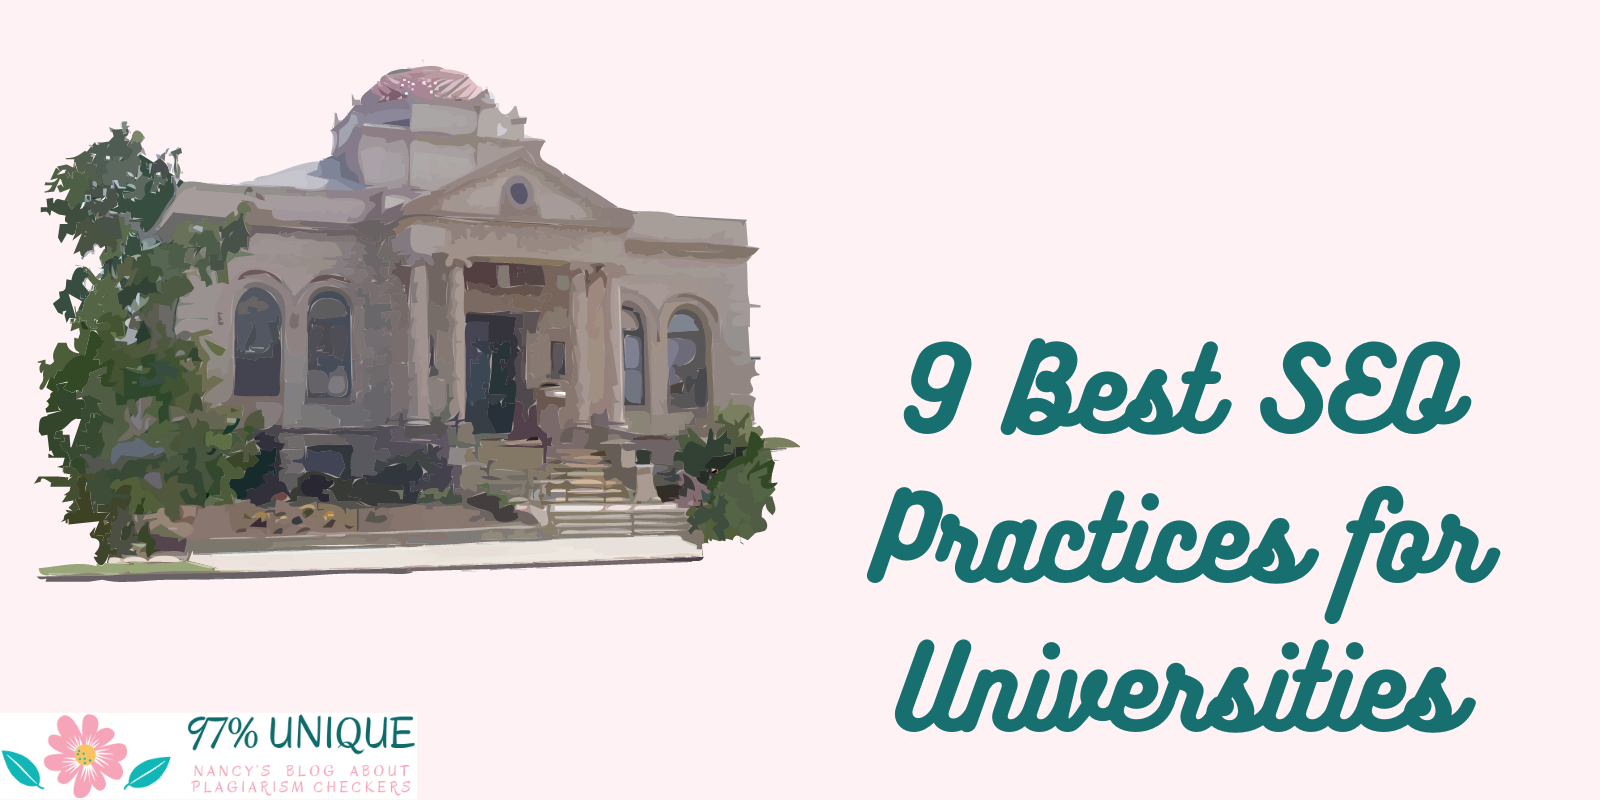 9 SEO Best Practices for Universities for Better Enrollment